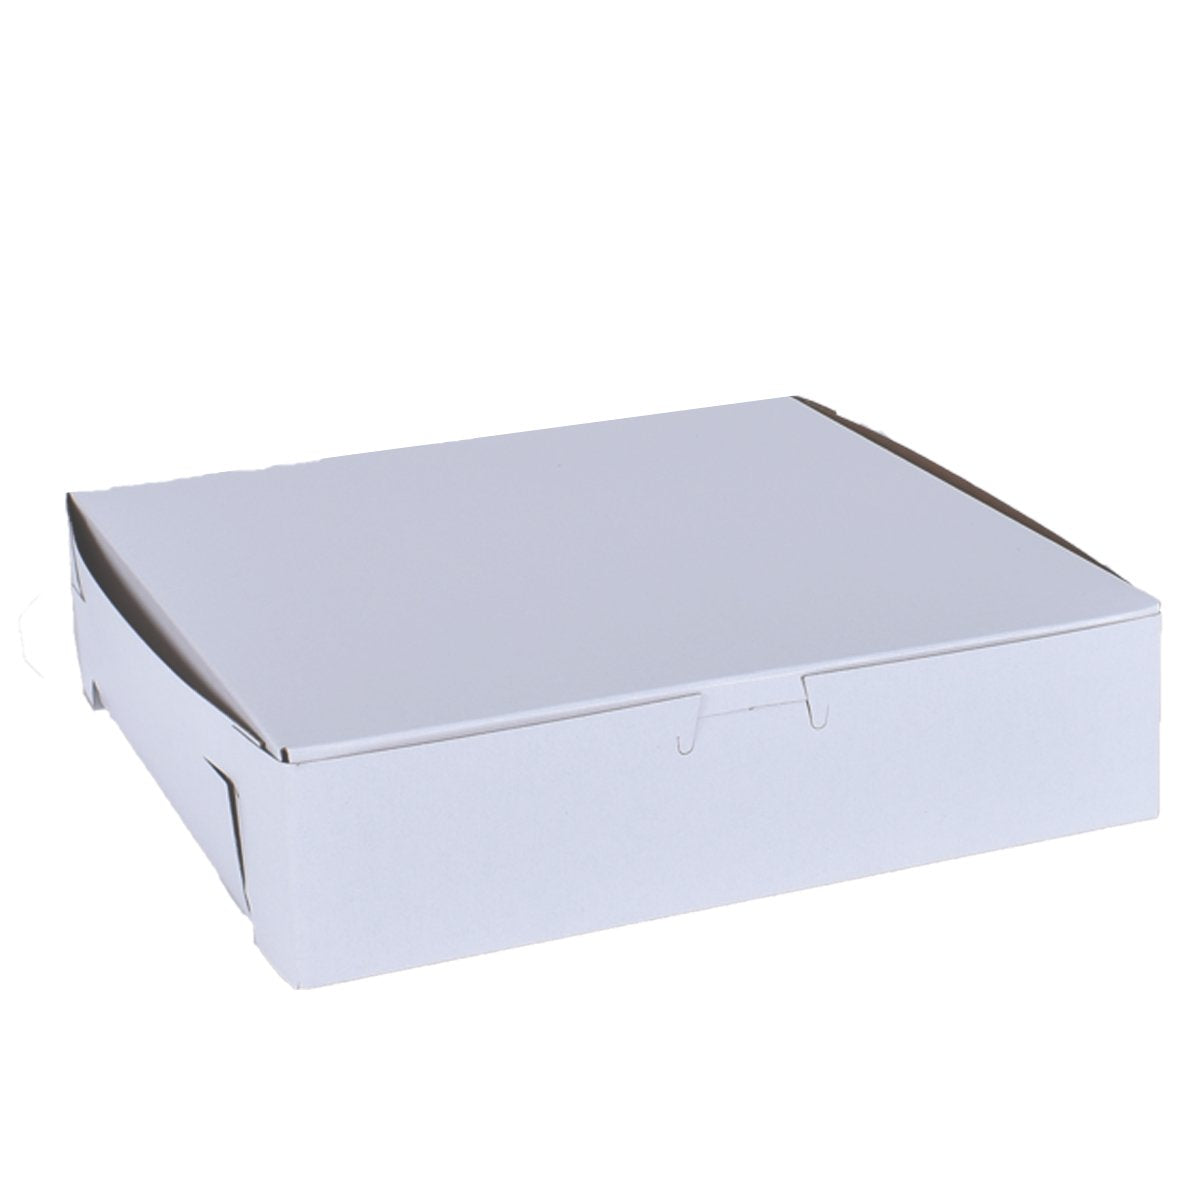 White Cake Boxes - 8x8x2.5 Bake Supply Plus Box - Bake Supply Plus